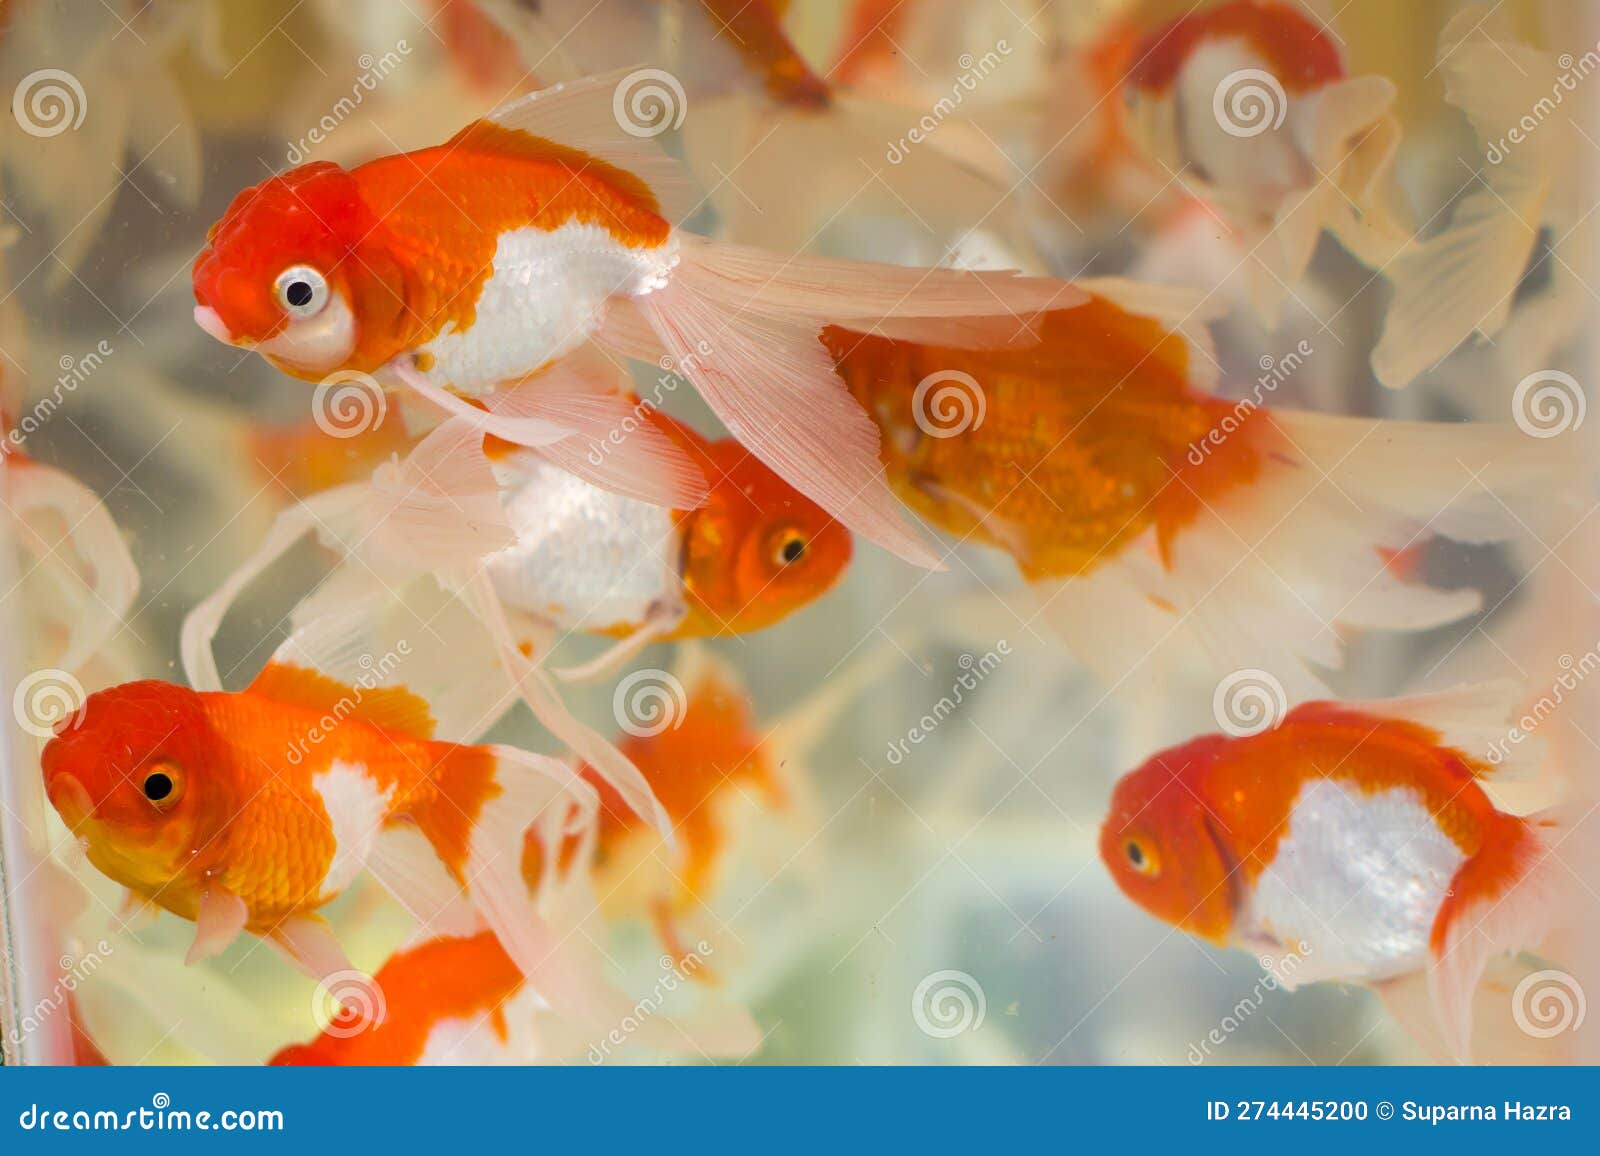 Closeup Shot of Red Cap Oranda Goldfish Kept in an Aquarium of Pet Shop or  Fish Store. this Popular Ornamental Fish Has Silver Stock Photo - Image of  swimming, white: 274445200